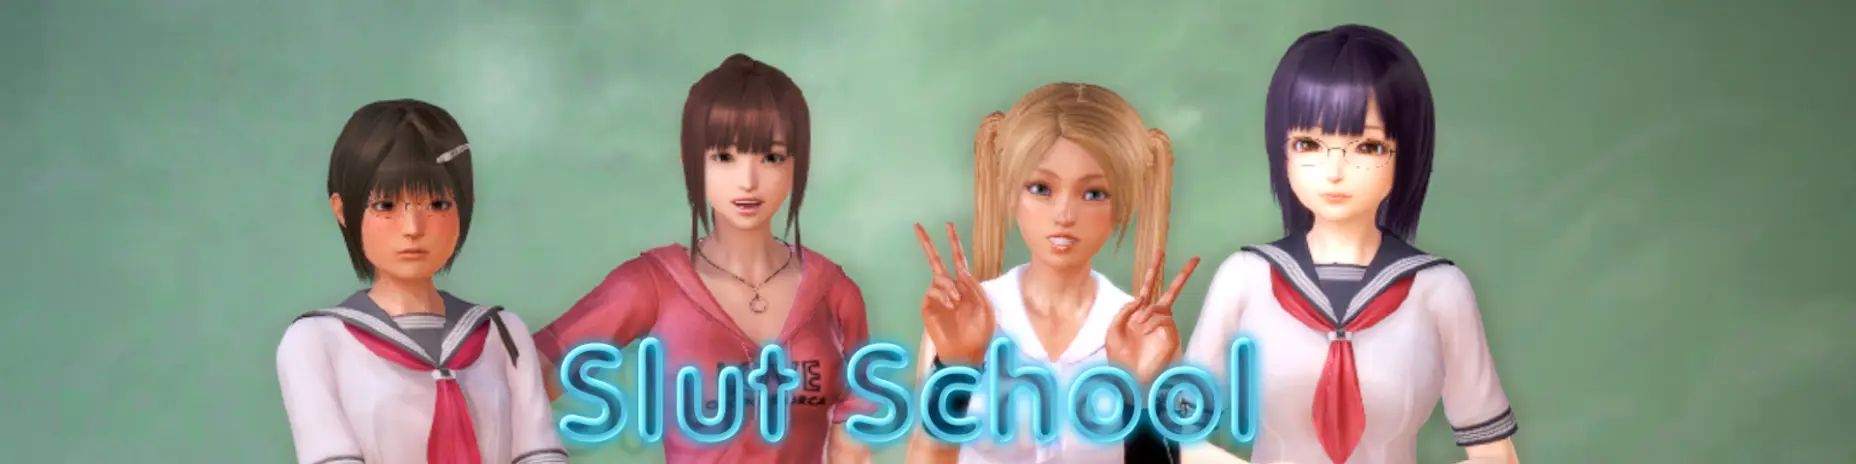 Slut School [v0.1.0] main image